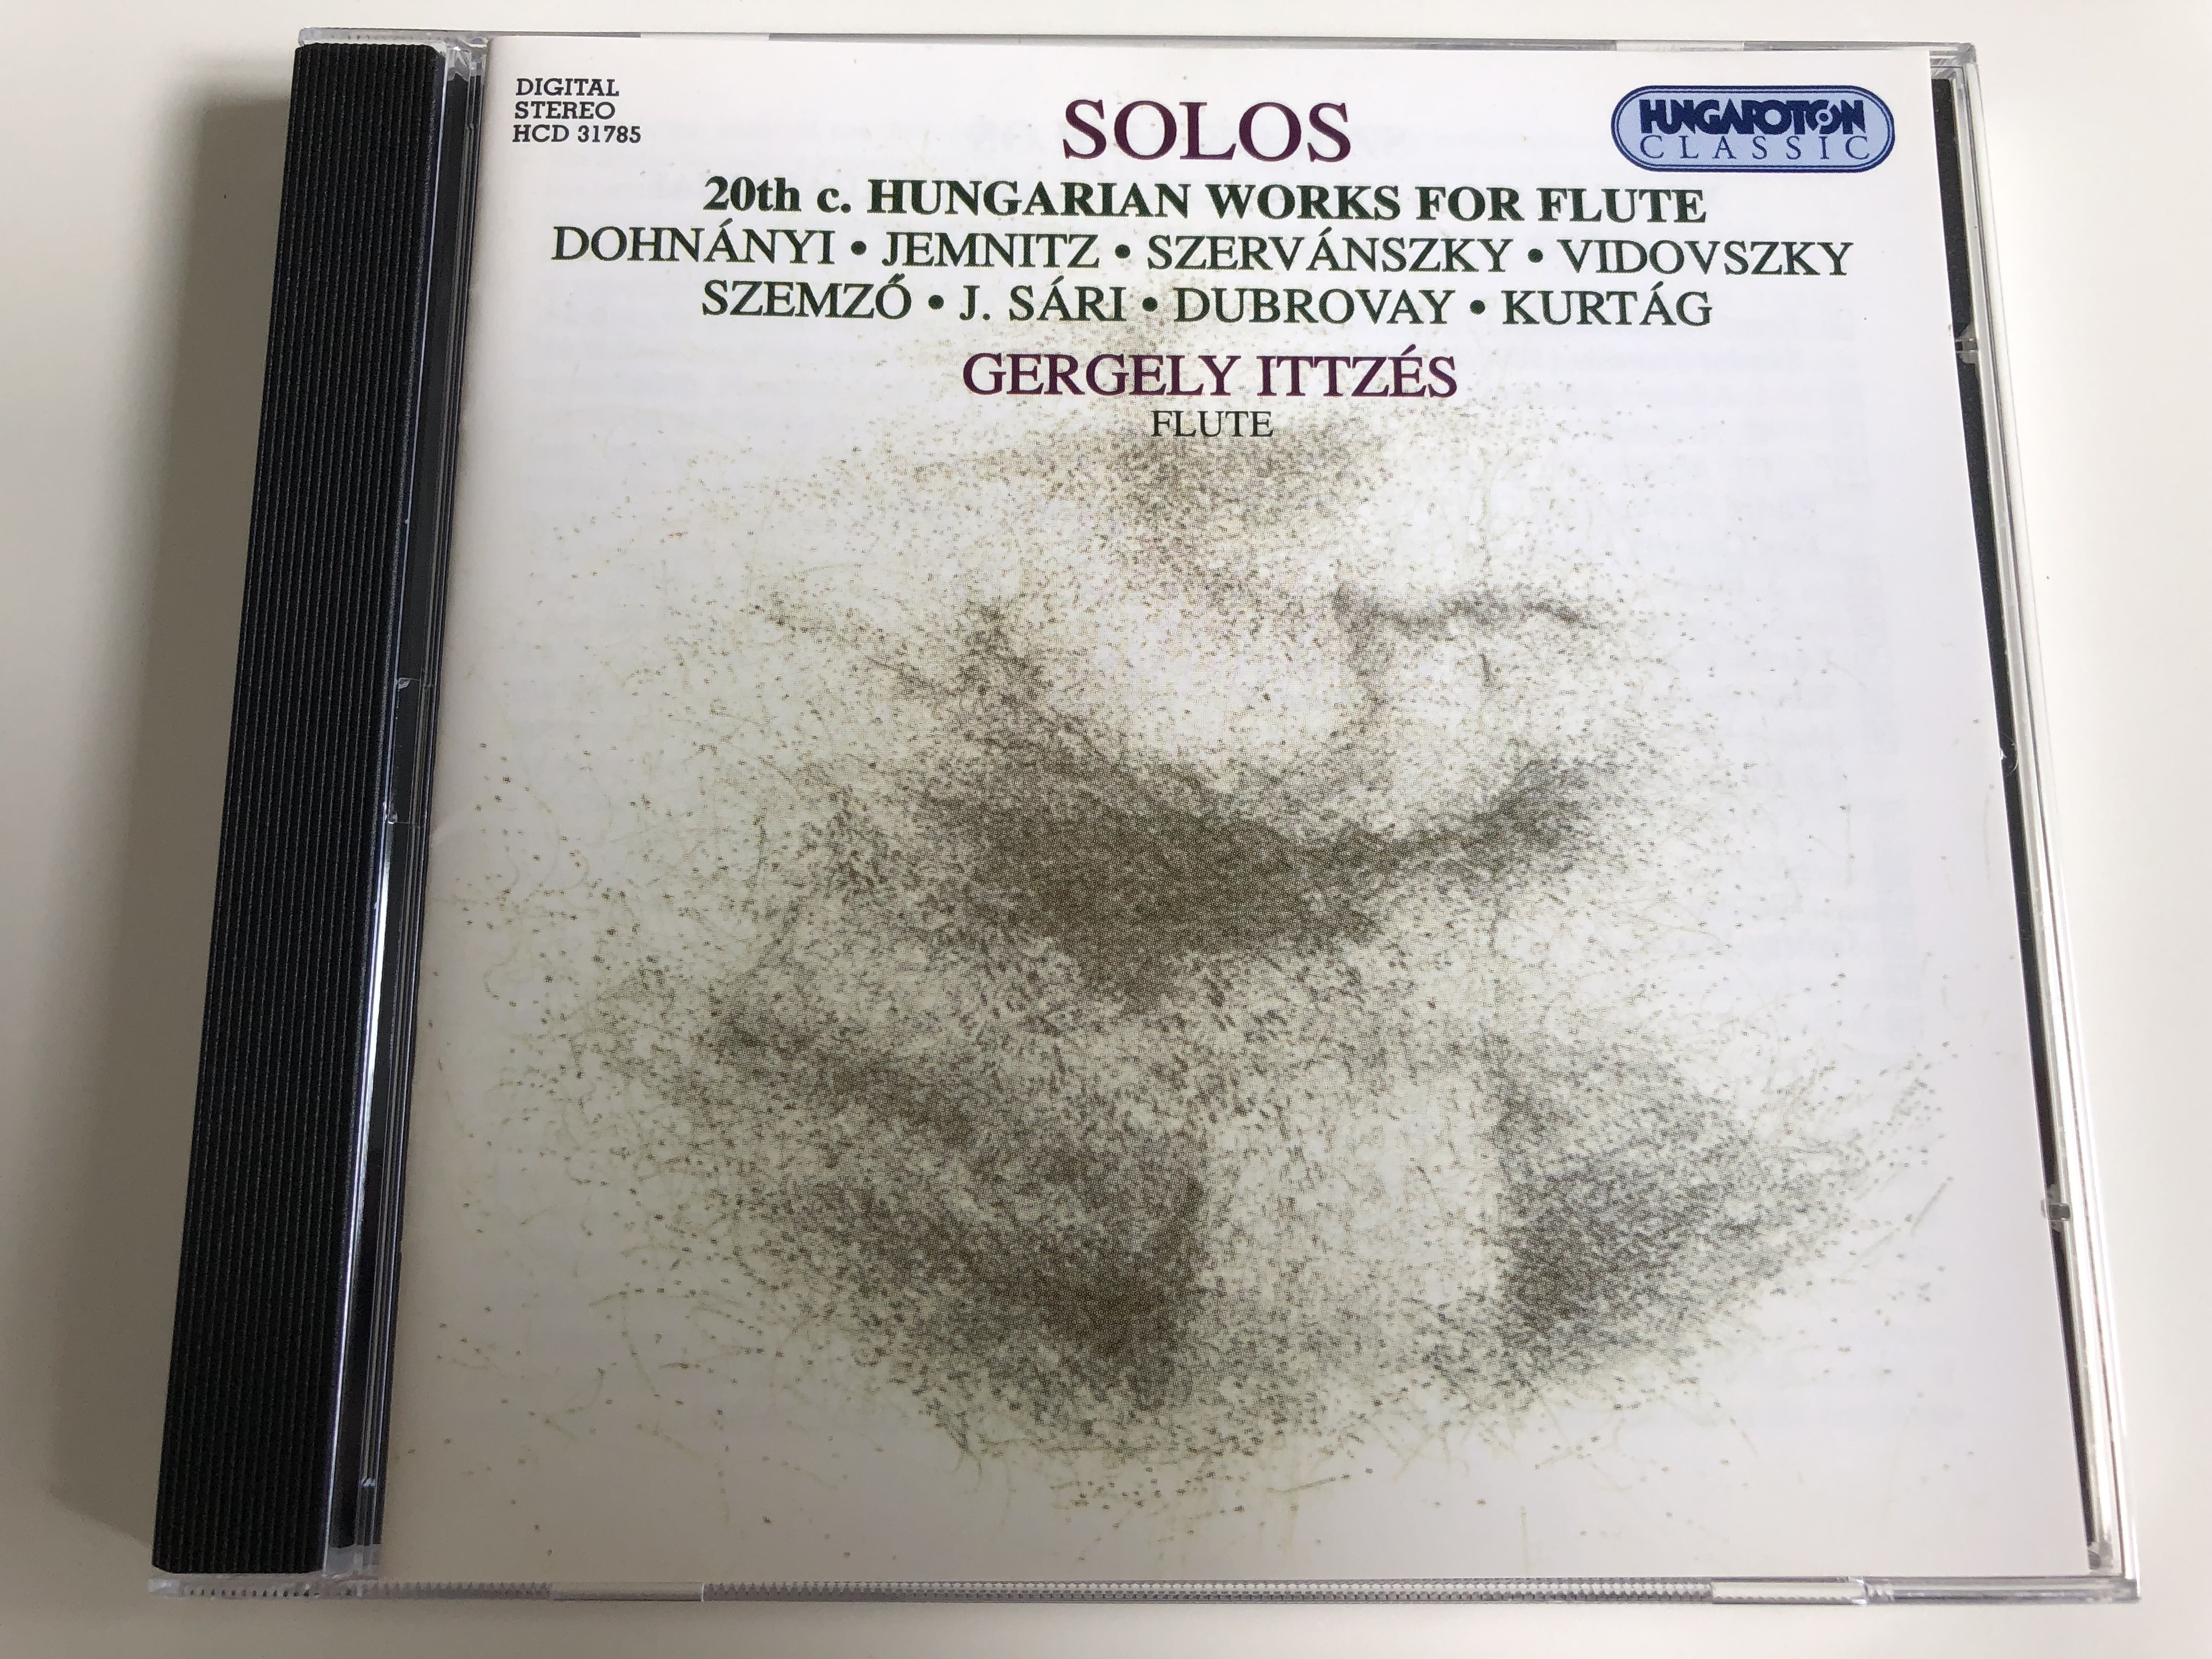 solos-20th-c.-hungarian-works-for-flute-dohn-nyi-jemnitz-szerv-nszky-vidovszky-szemz-j.-s-ri-dubrovay-kurt-g-gergely-ittz-s-flute-hungaroton-classic-hcd-31785-audio-cd-1999-1-.jpg